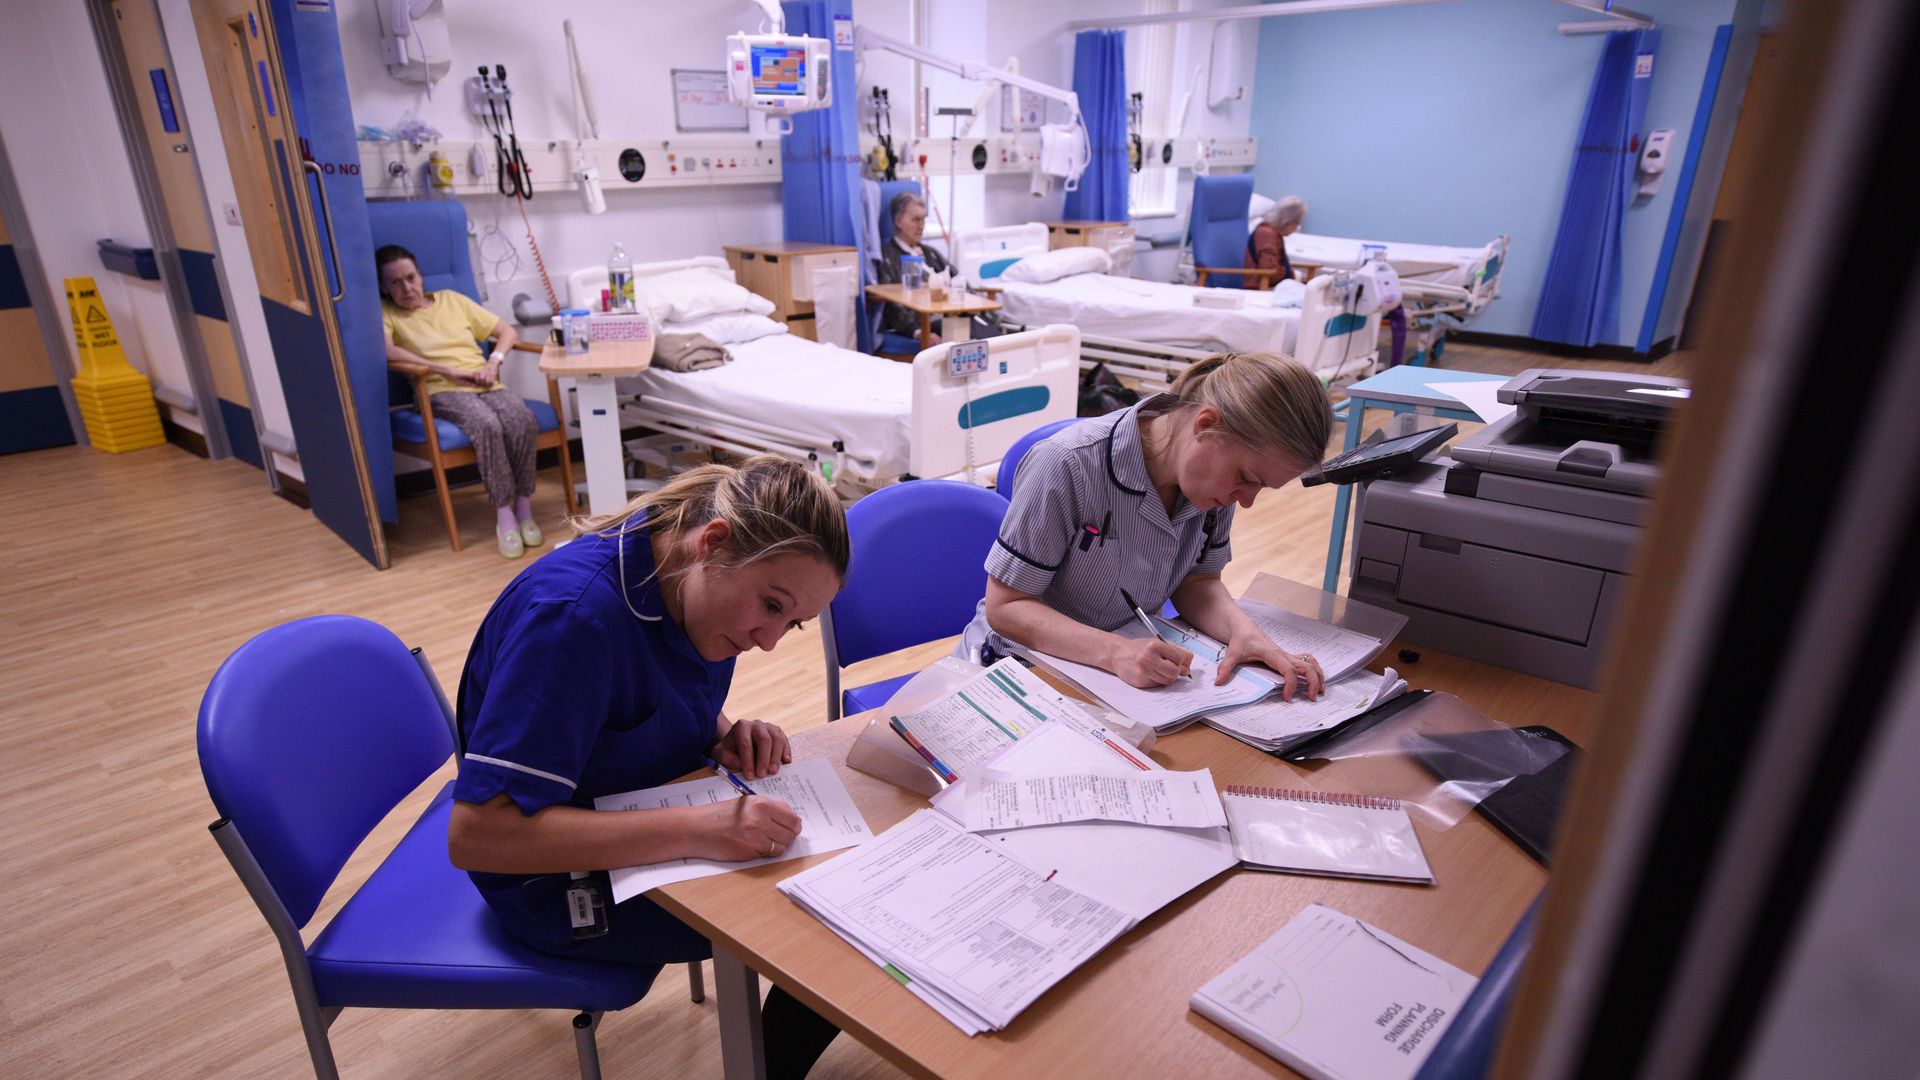 Nurses writing on papers near hospital beds